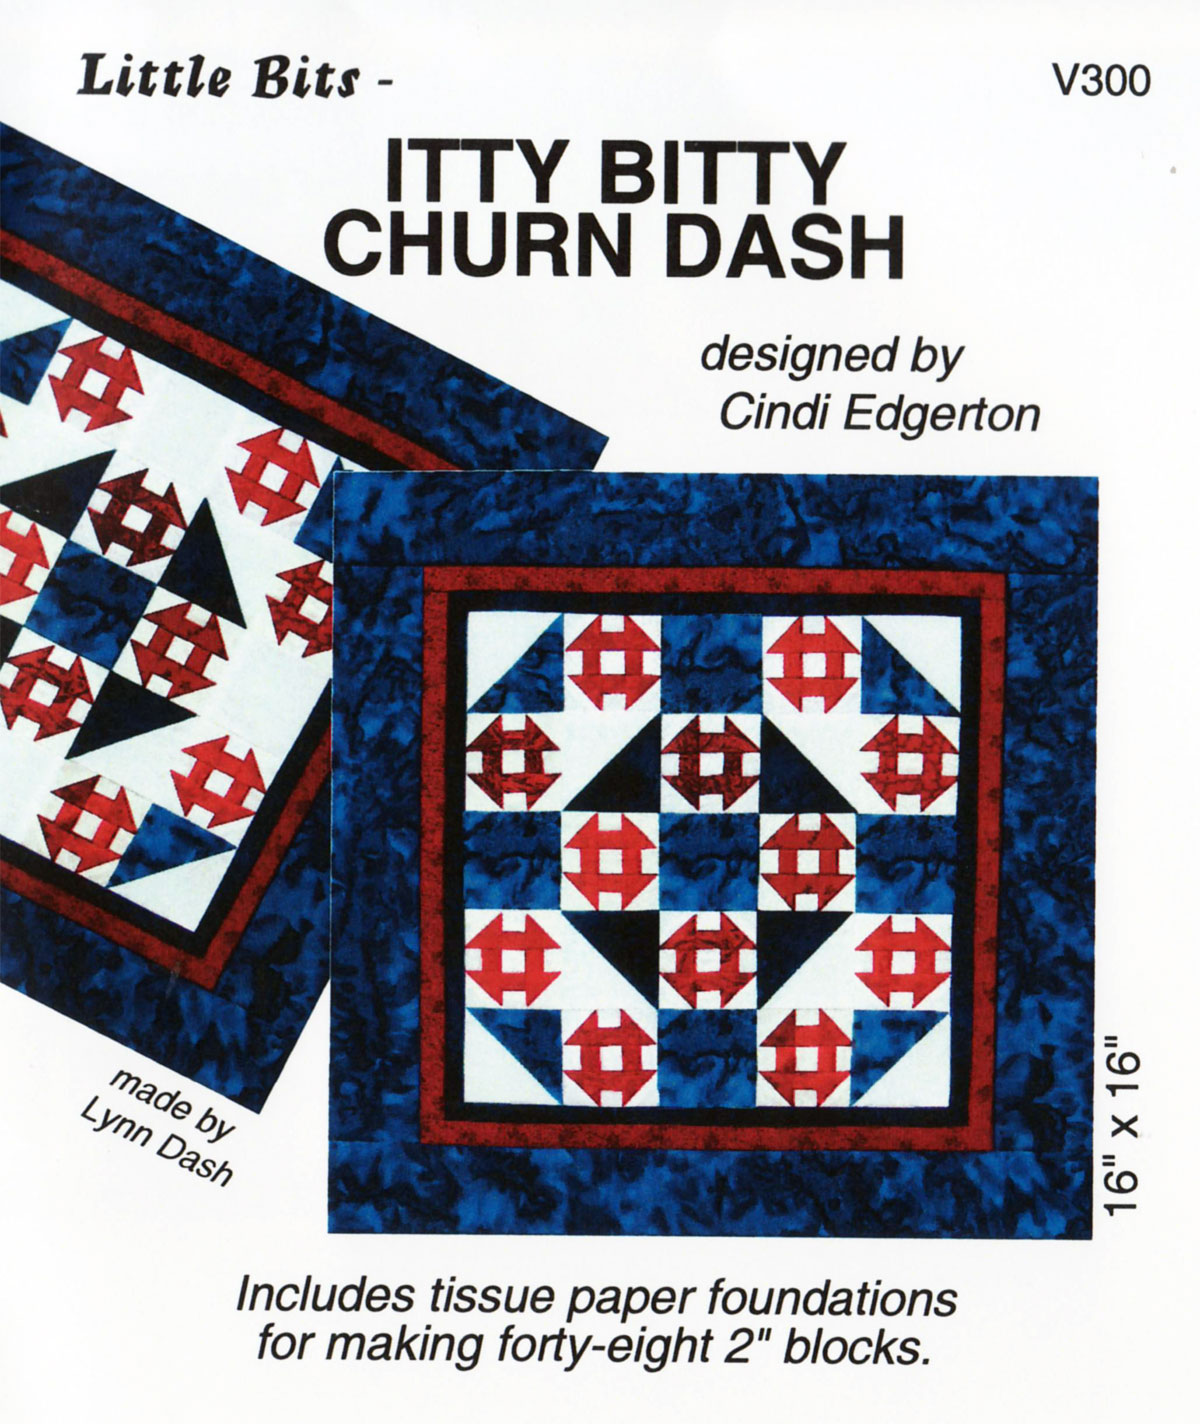 Little-Bits-Itty-Bitty-Churn-Dash-quilt-sewing-pattern-Cindi-Edgerton-front